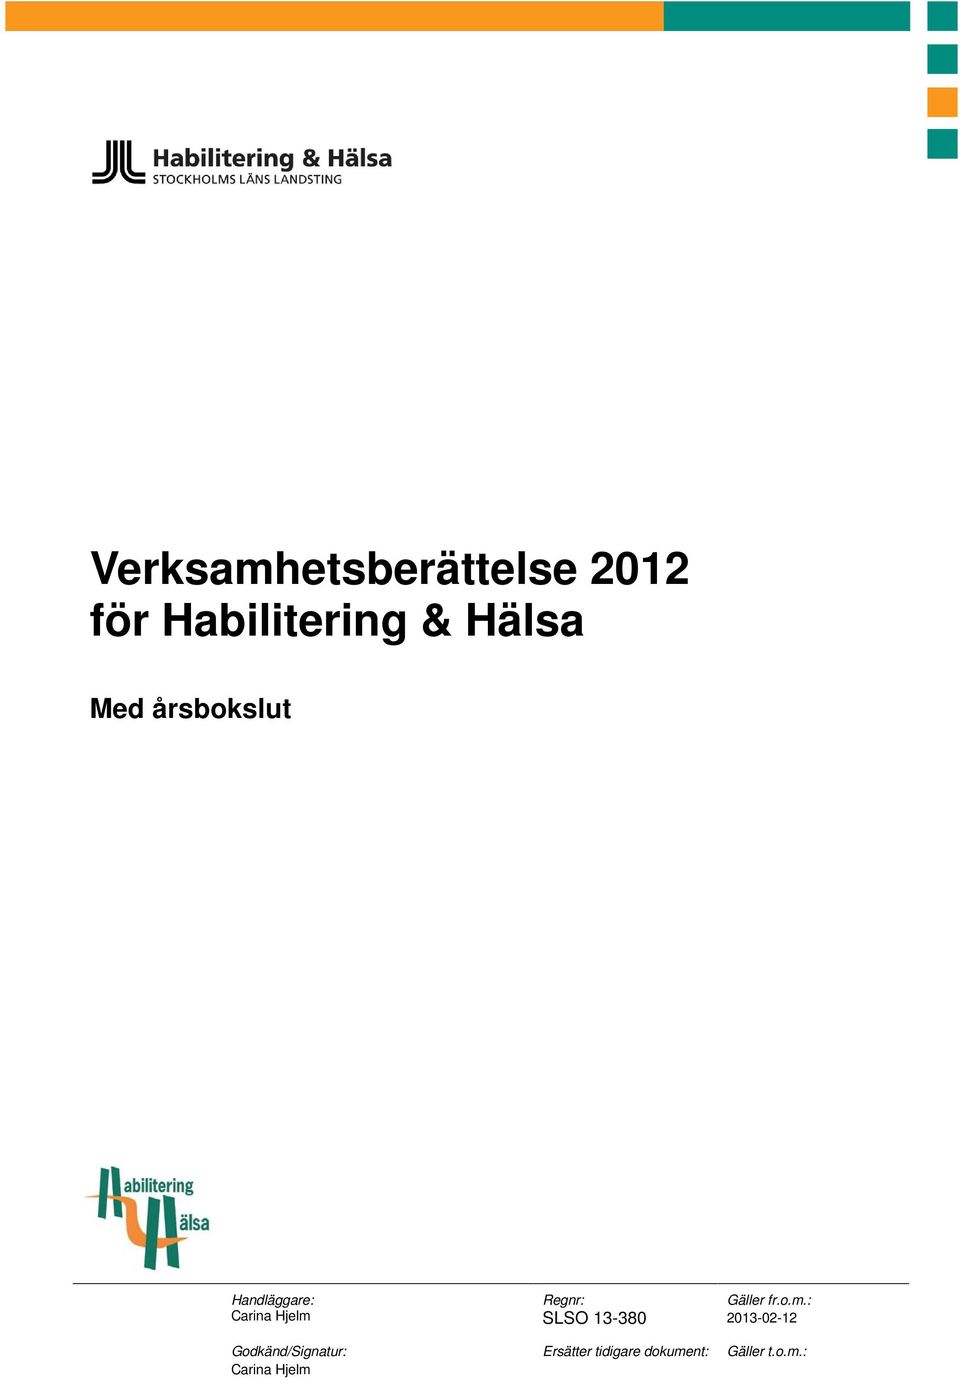 : Carina Hjelm SLSO 13-380 2013-02-12